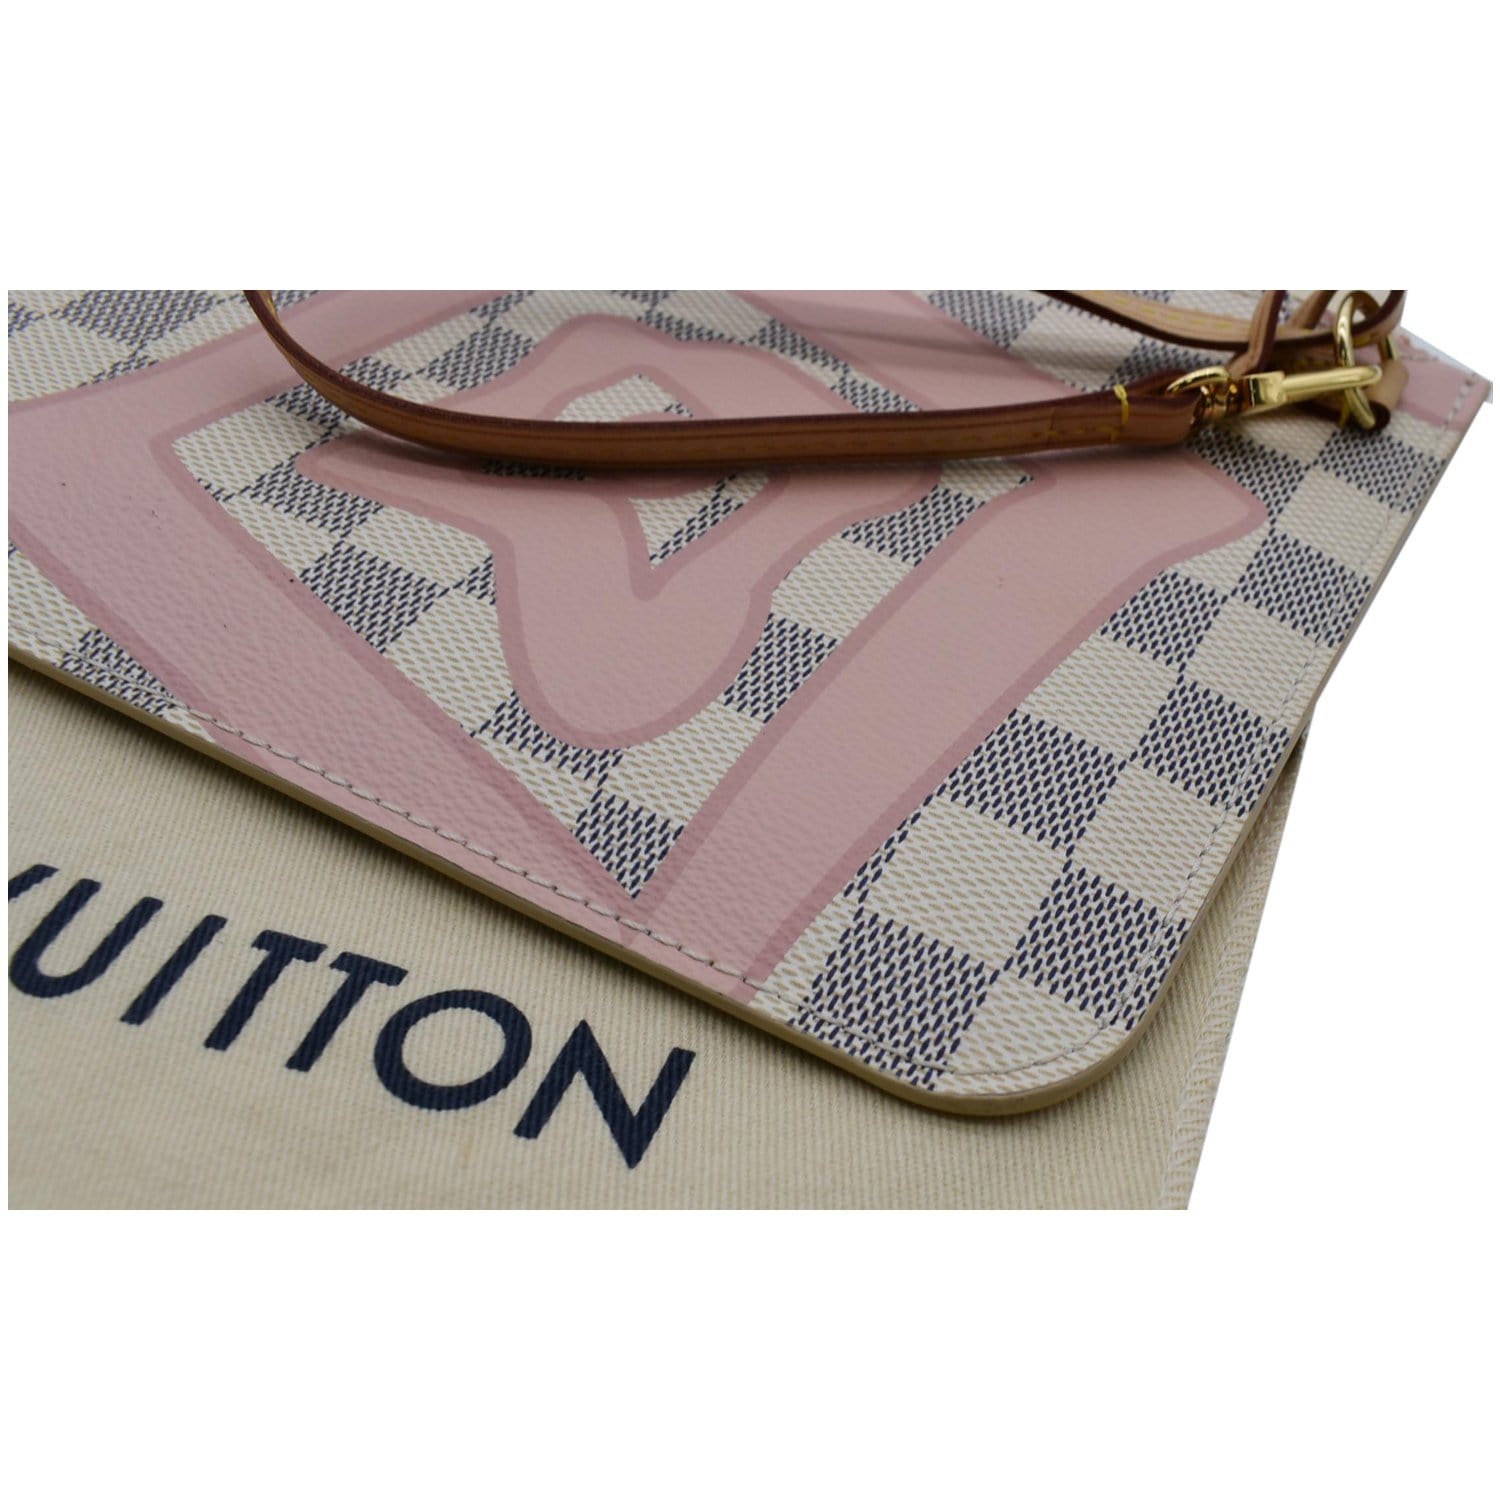 Louis Vuitton Damier Azur Tahitienne Neverfull MM w/ Pouch - Neutrals  Totes, Handbags - LOU762300